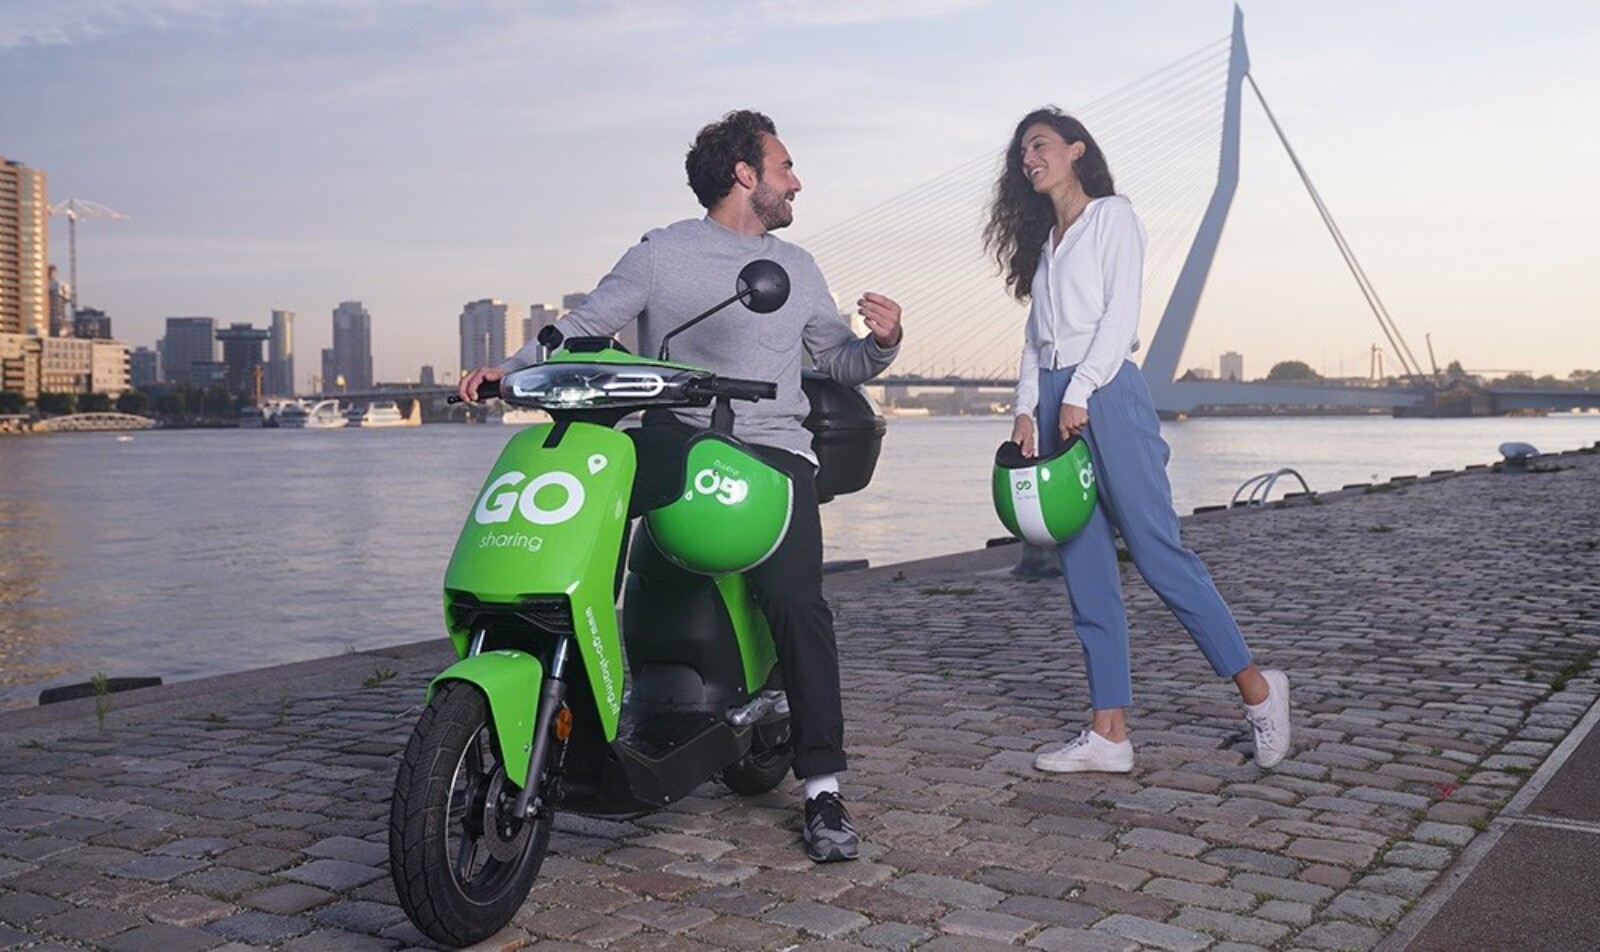 Go sharing scooter Rotterdam Centrum